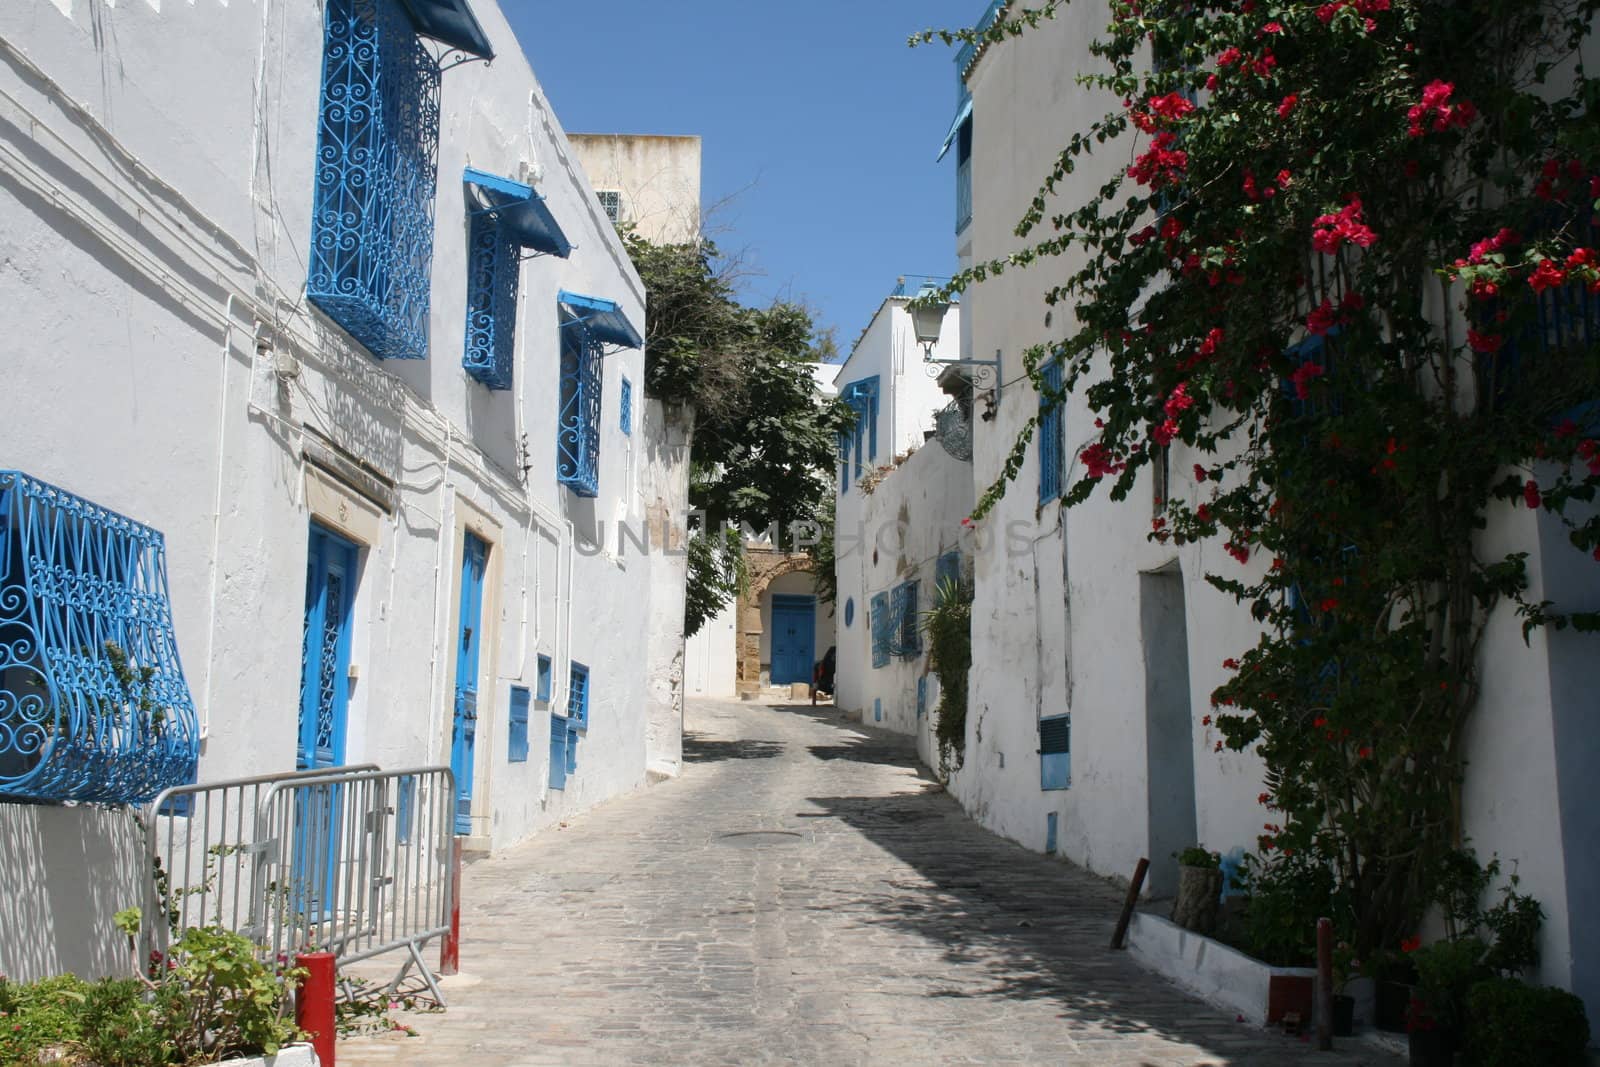 The town od Sidi bou Said in Tunisia